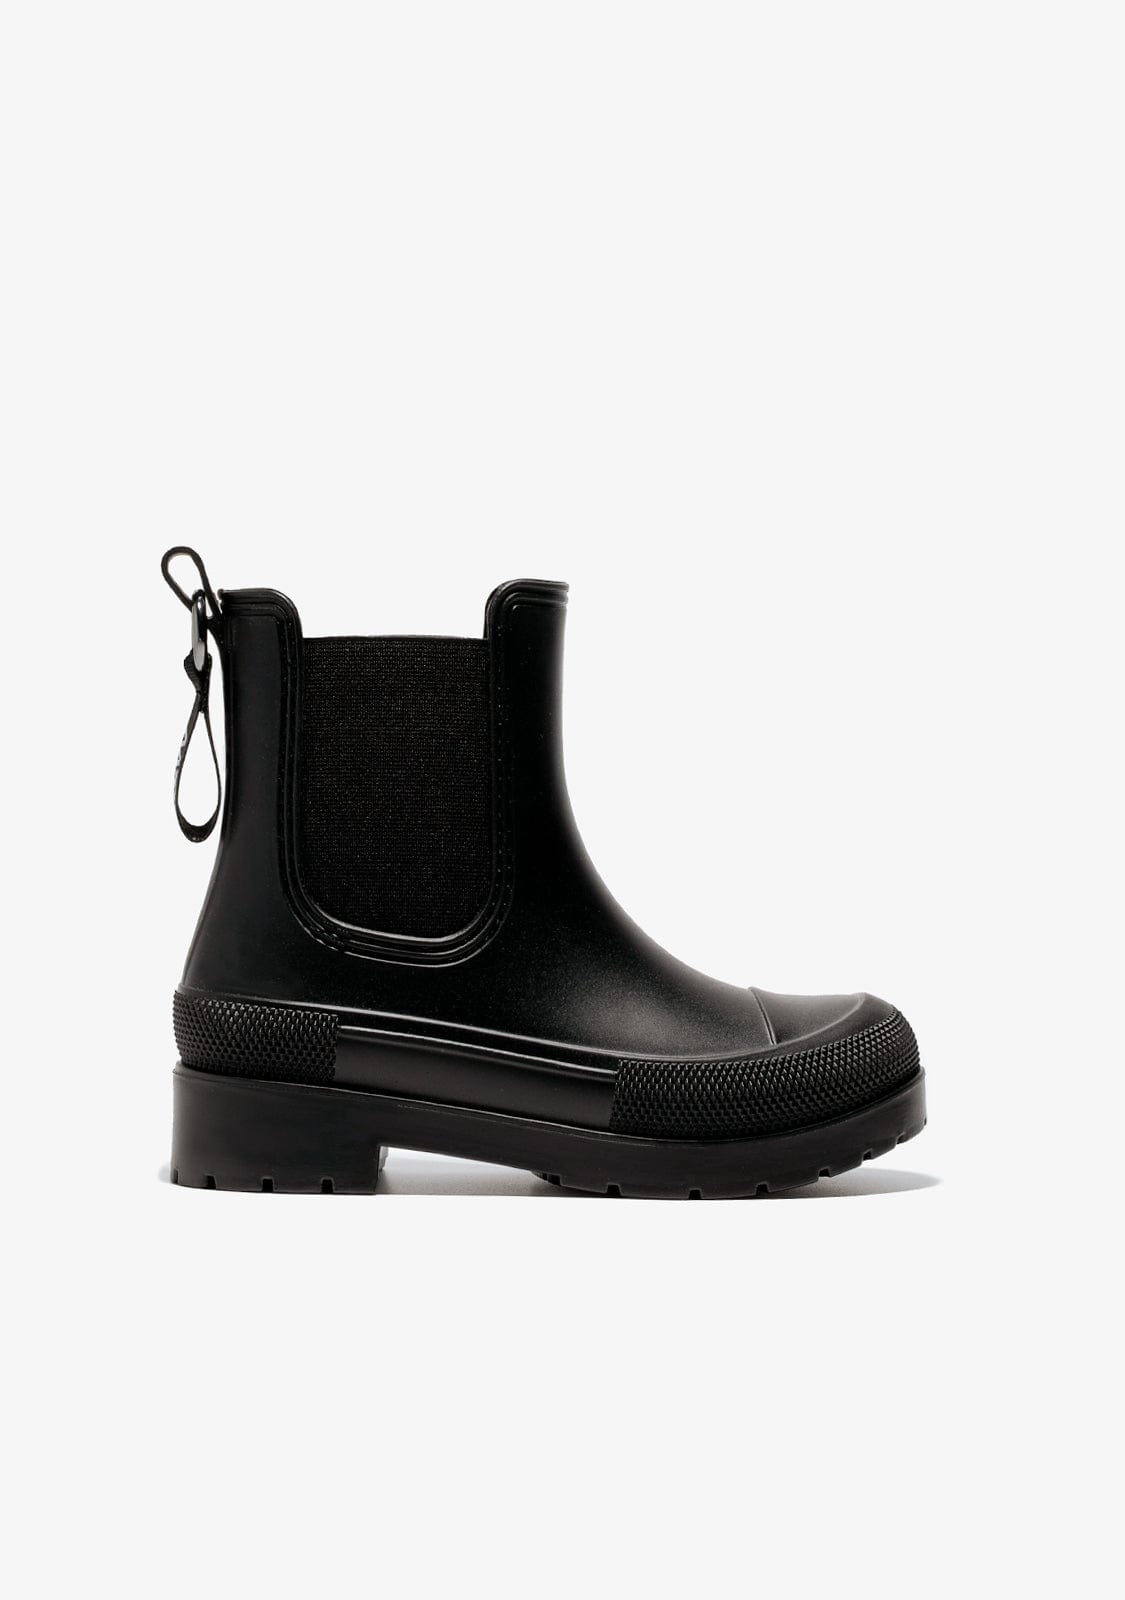 B&W JUNIOR Shoes Unisex Black Rain Boots B&W